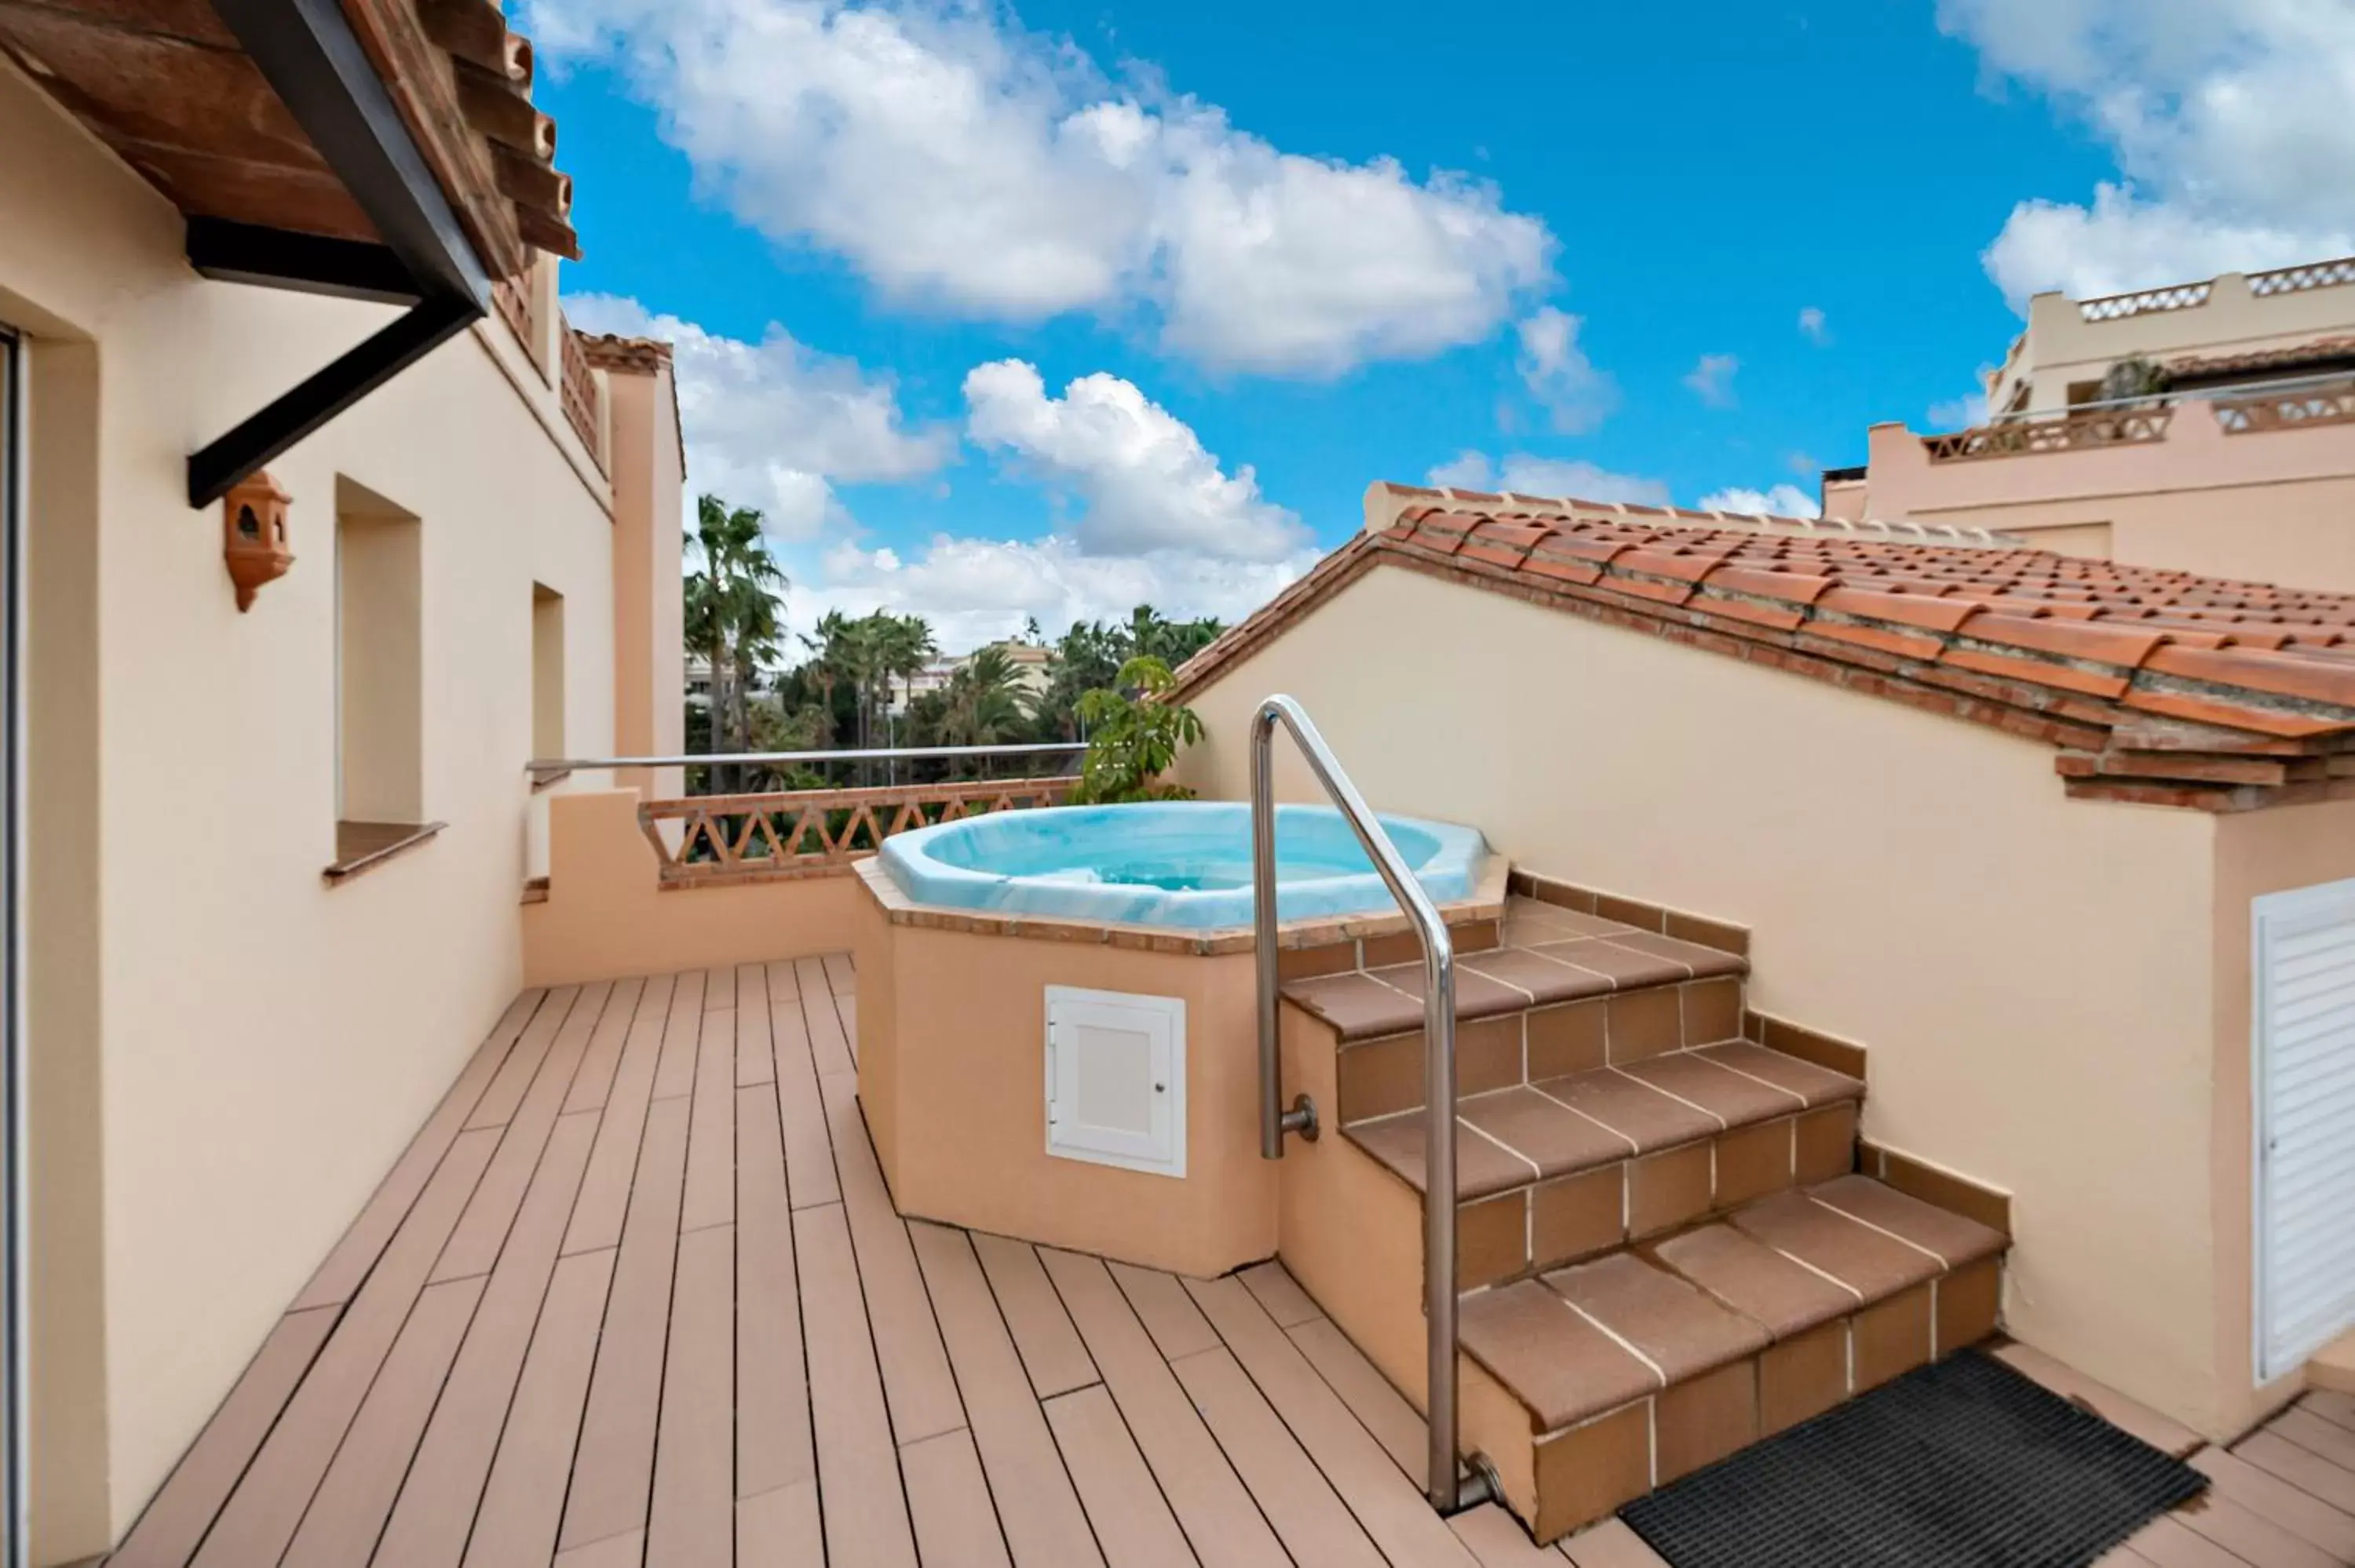 Hot Tub, Swimming Pool in Wyndham Grand Residences Costa del Sol